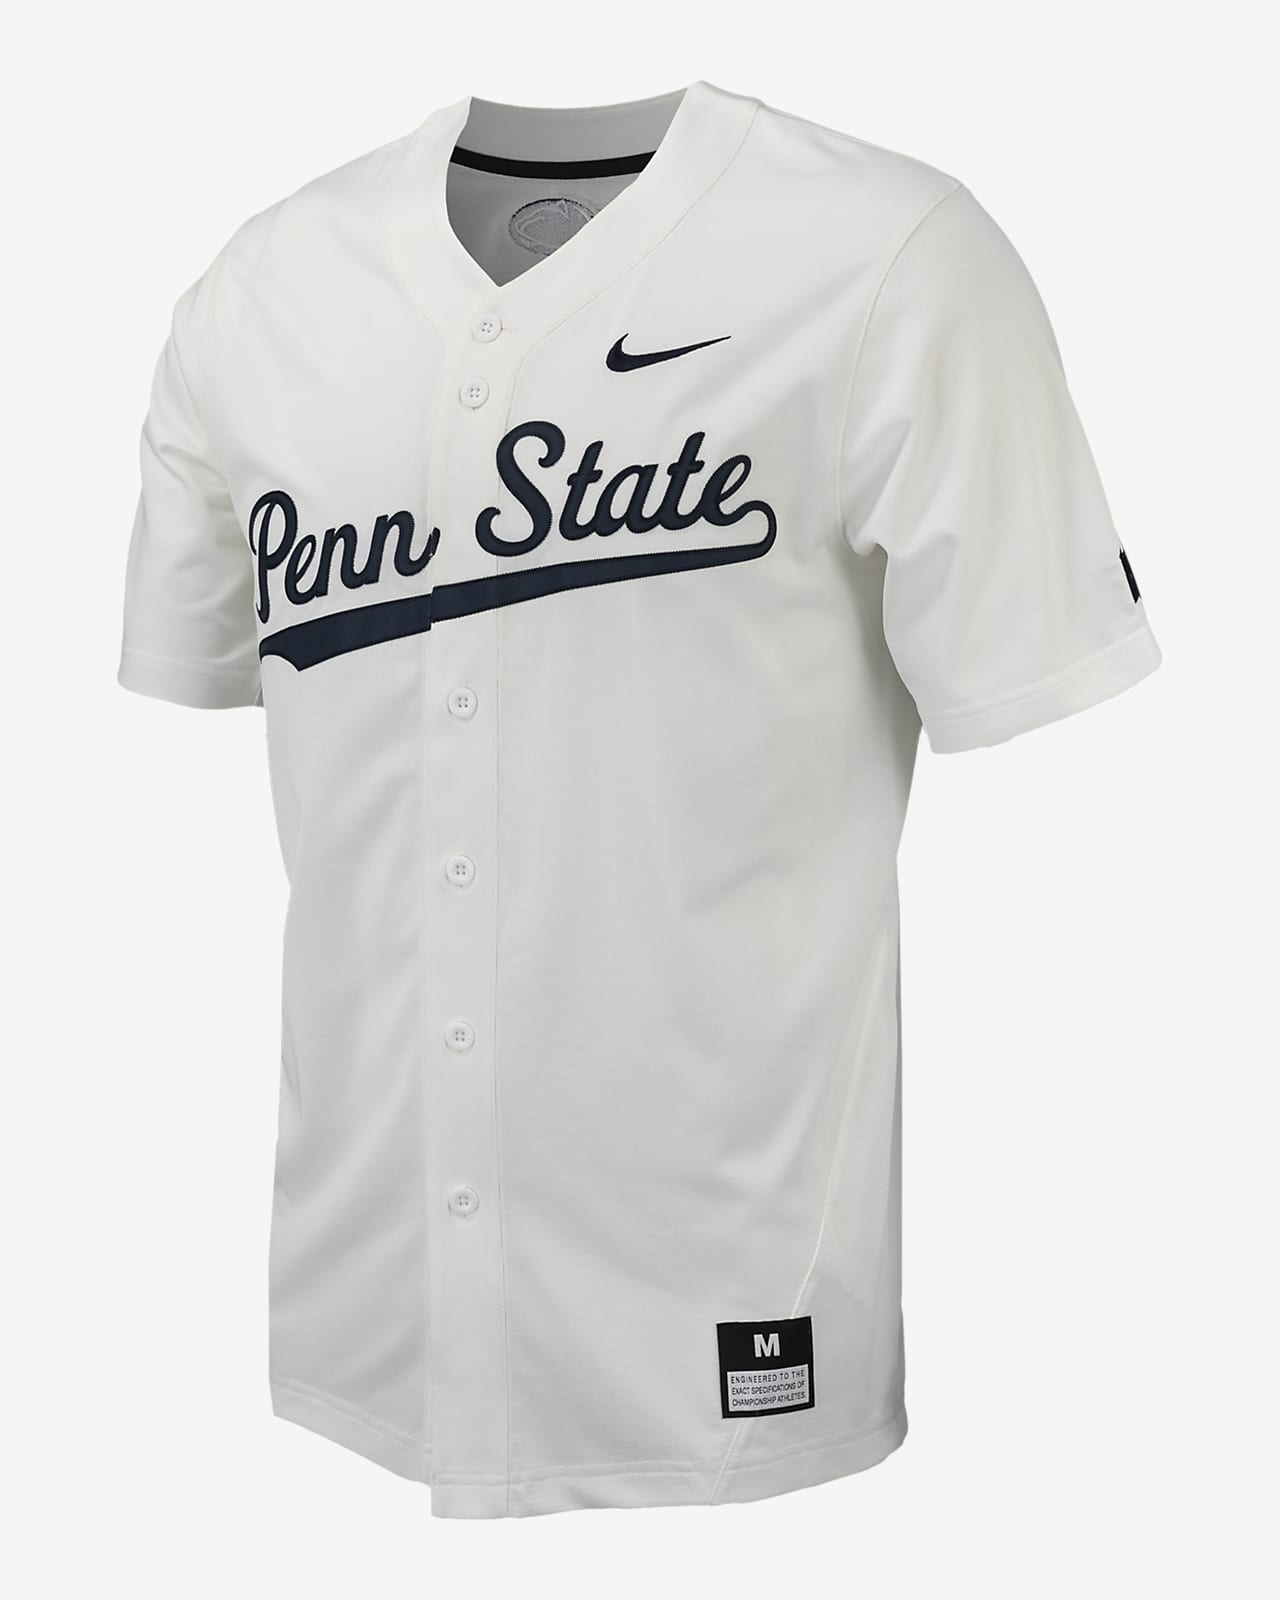 Penn State Men's Nike College Replica Baseball Jersey